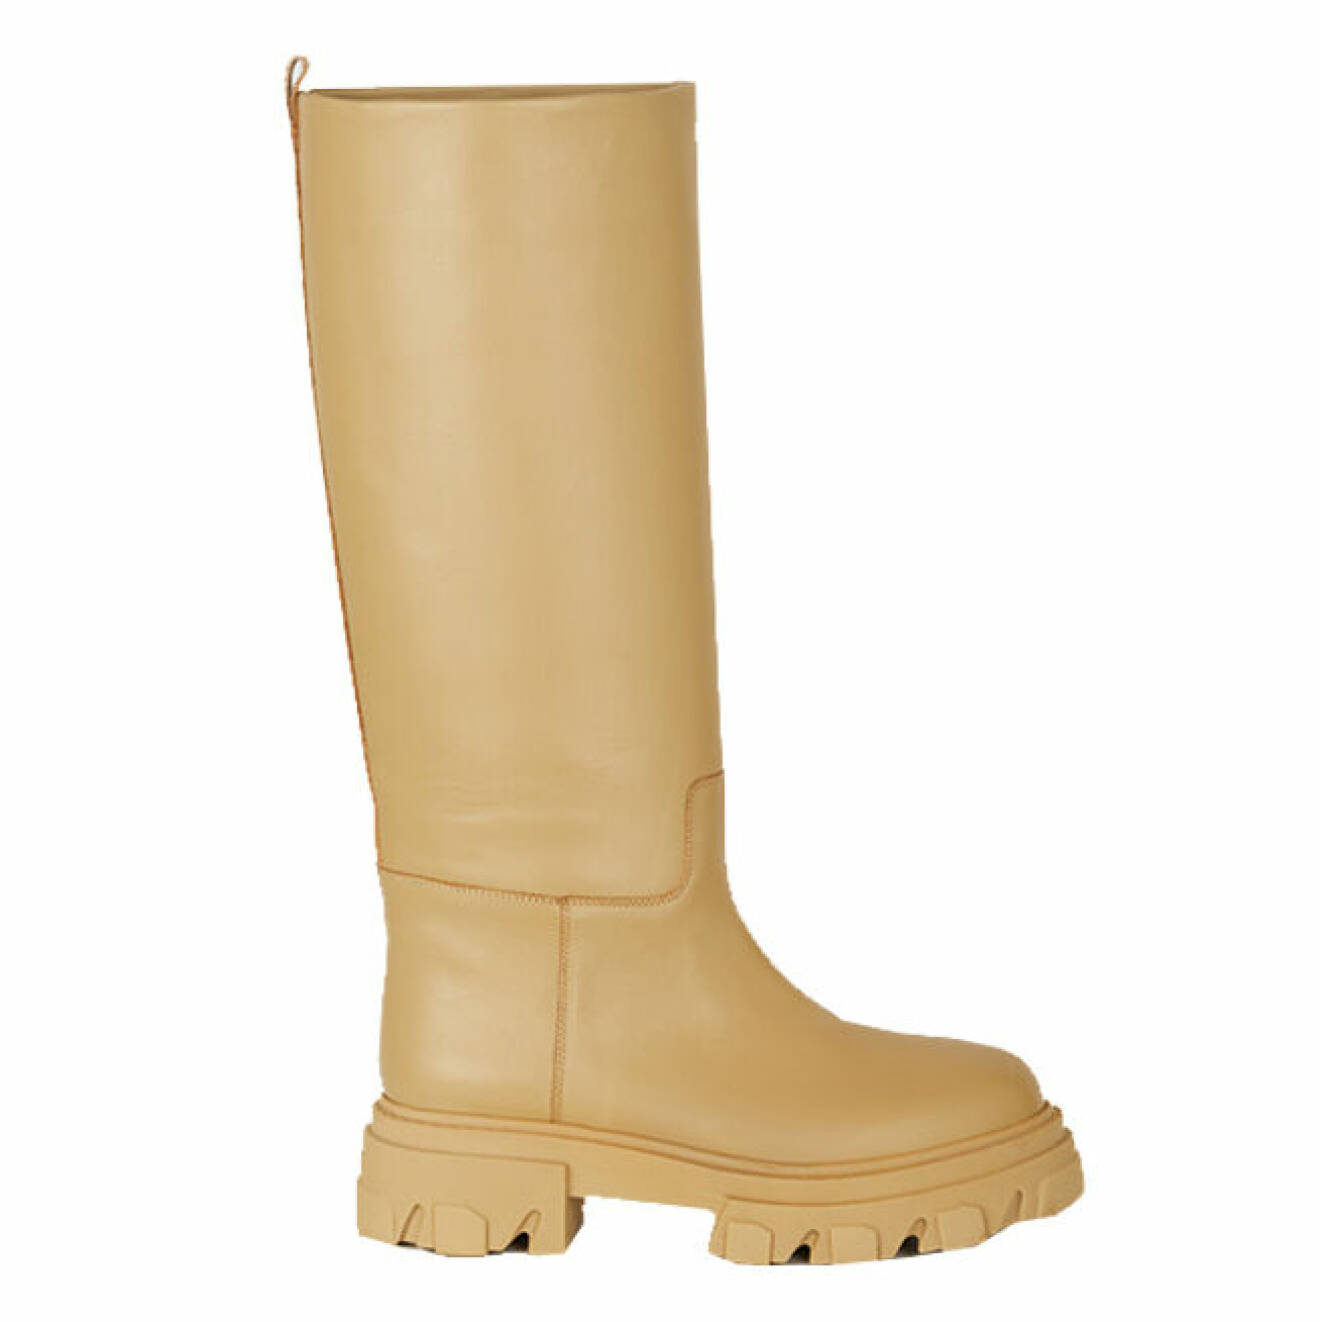 beige chunky boots i läder från Gia x Pernille Teisbaek hösten 2021